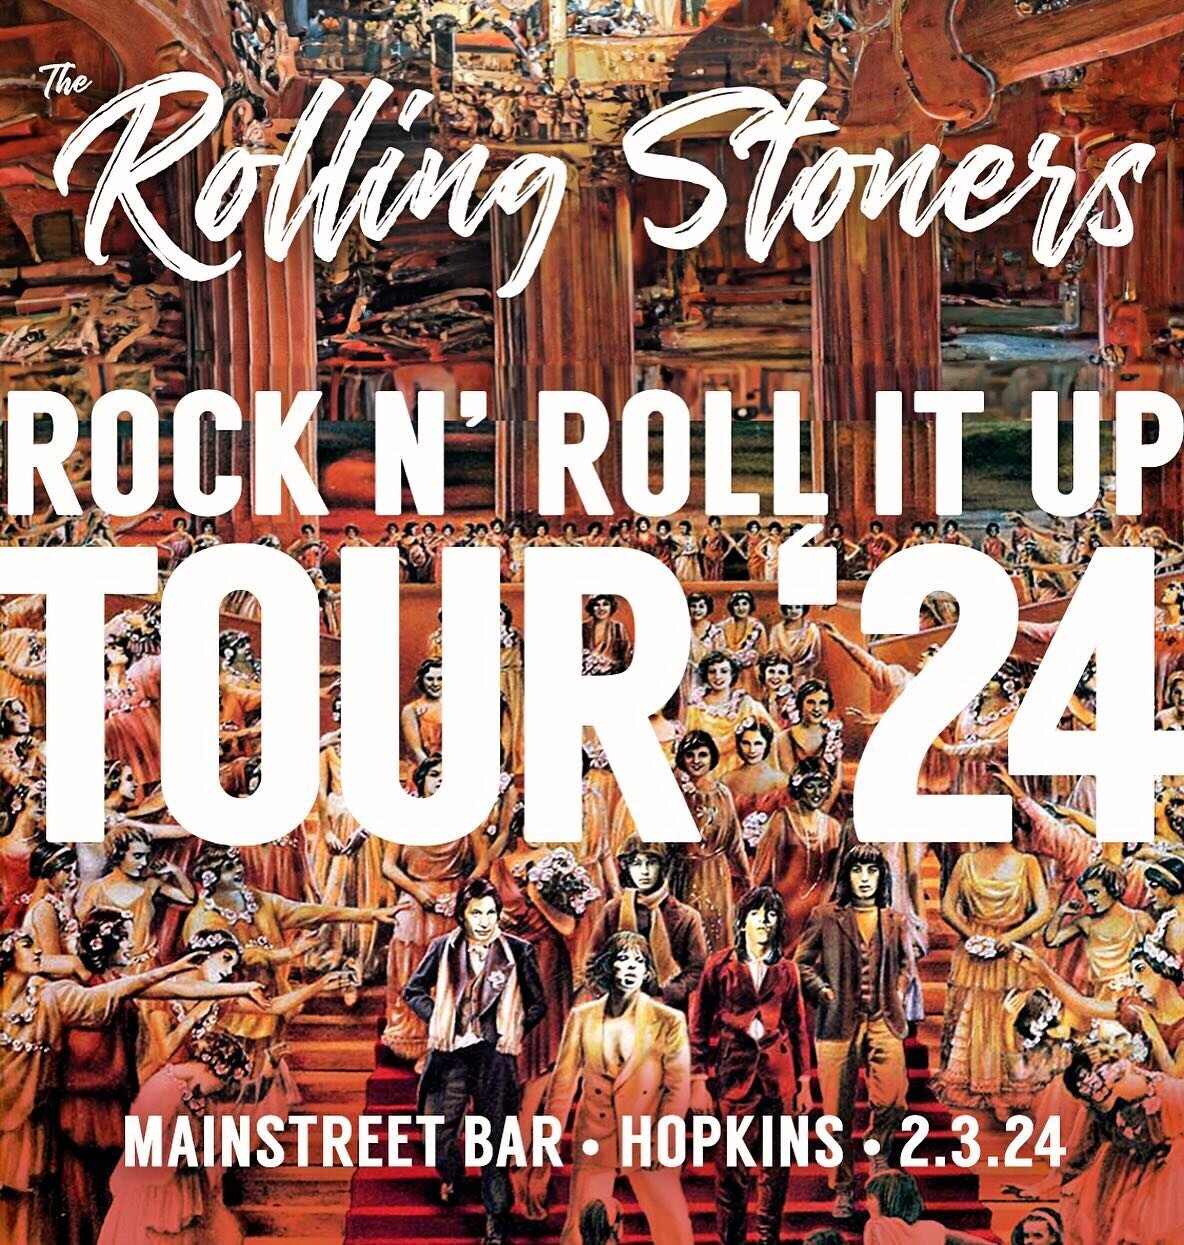 TOUR KICKOFF &bull; SAT 2/3 8:30 PM
Honky-tonk-disco-pop-blues-rockN-jam-fest 
👅 Bring your ragged company!
.
.
.
.
#rollingstoners #rocknrollituptour #rollingstones #tributenight #mnmusic